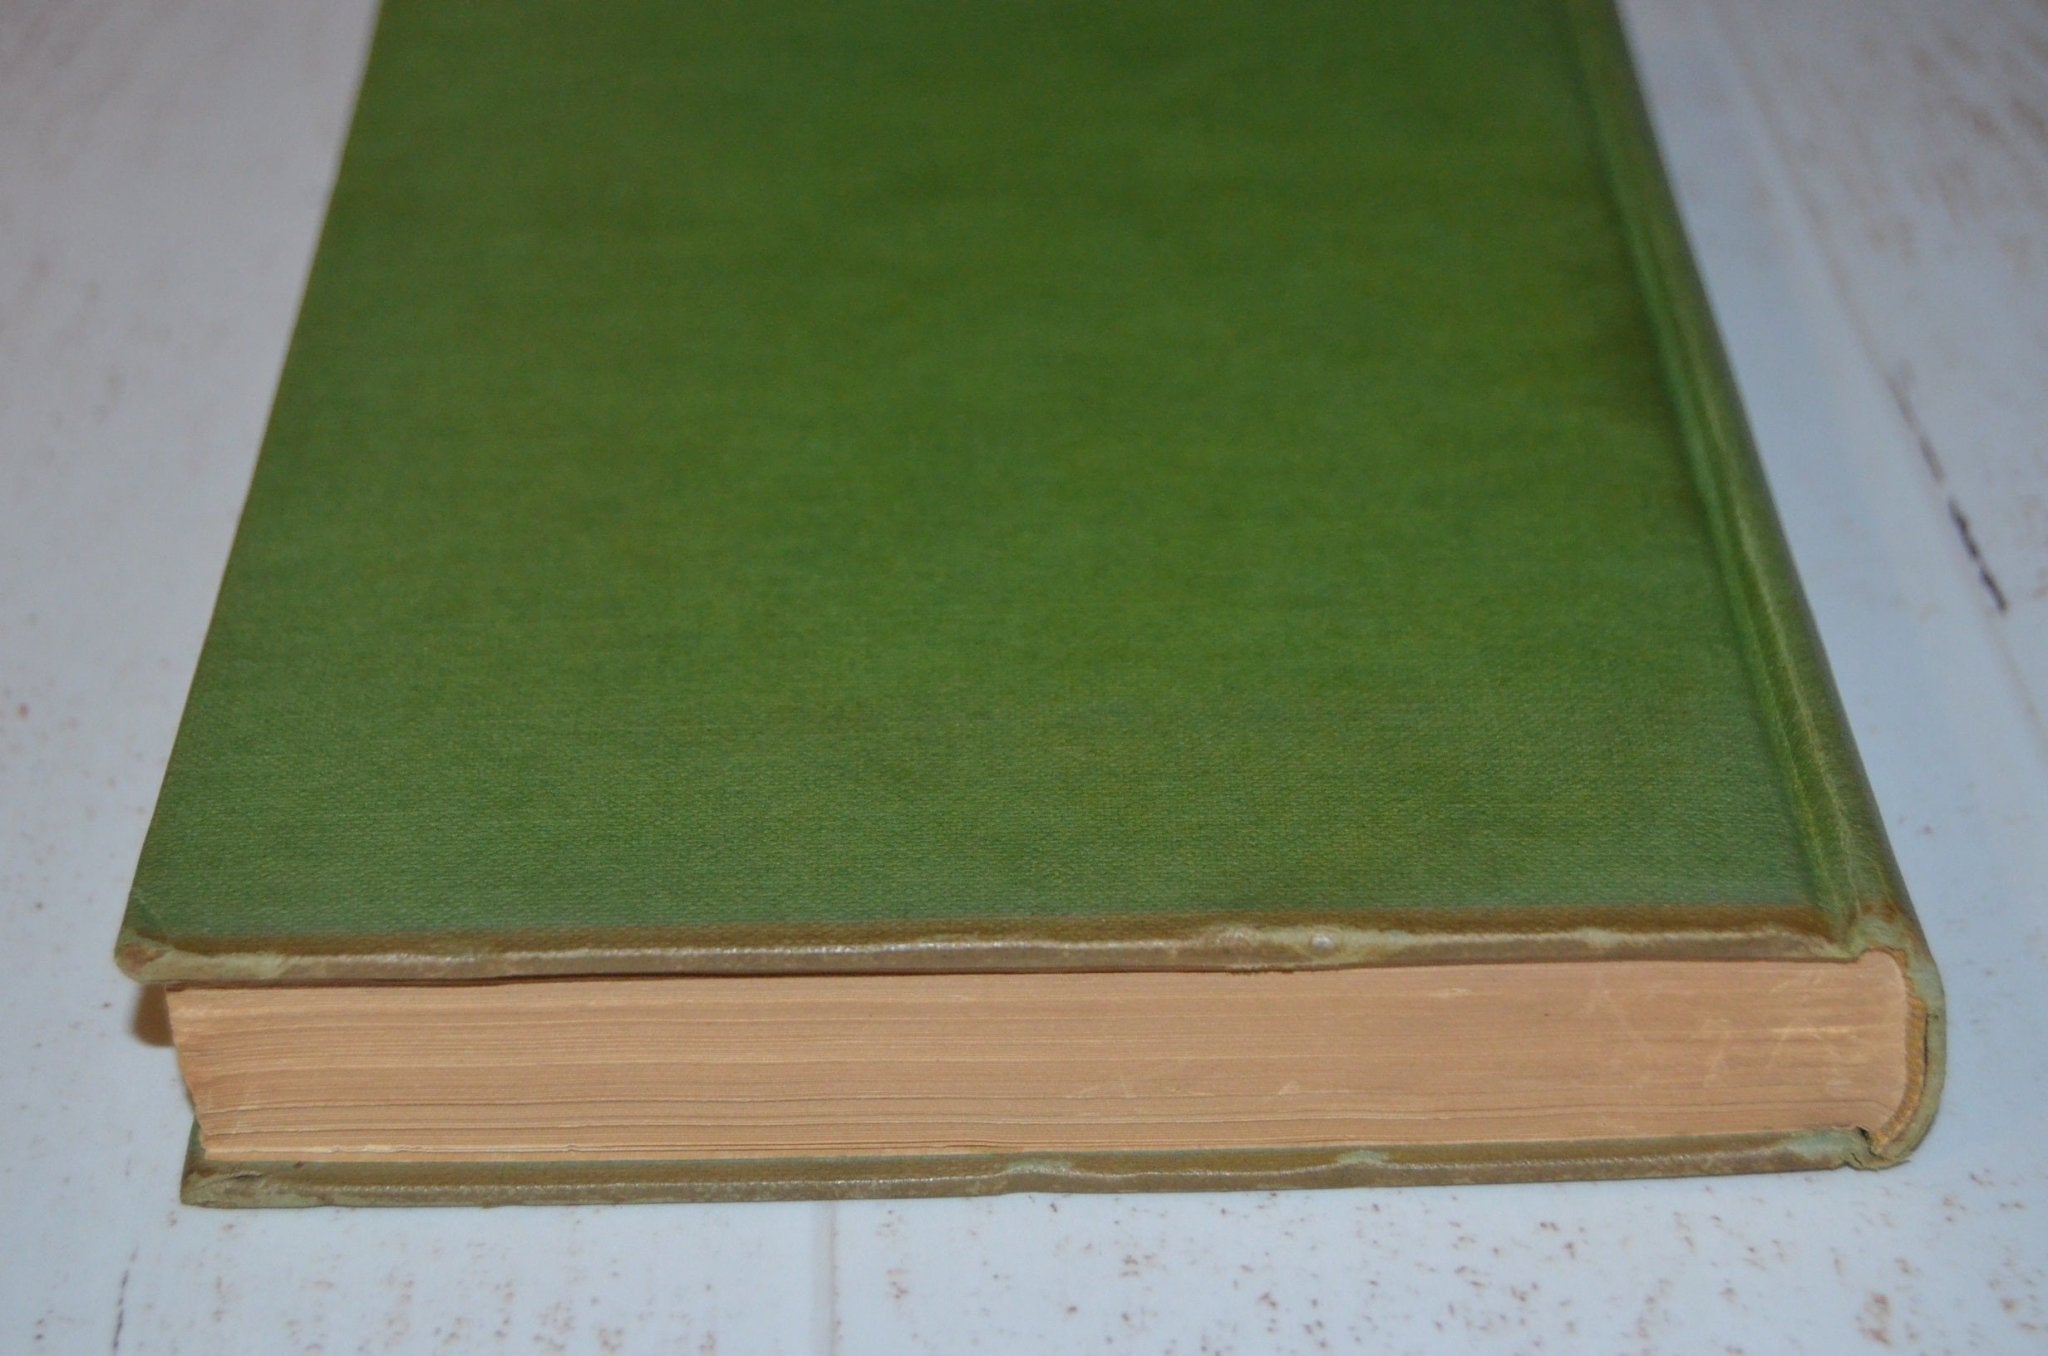 First Edition First Printing – Player Piano by Kurt Vonnegut 1952 - Brookfield Books